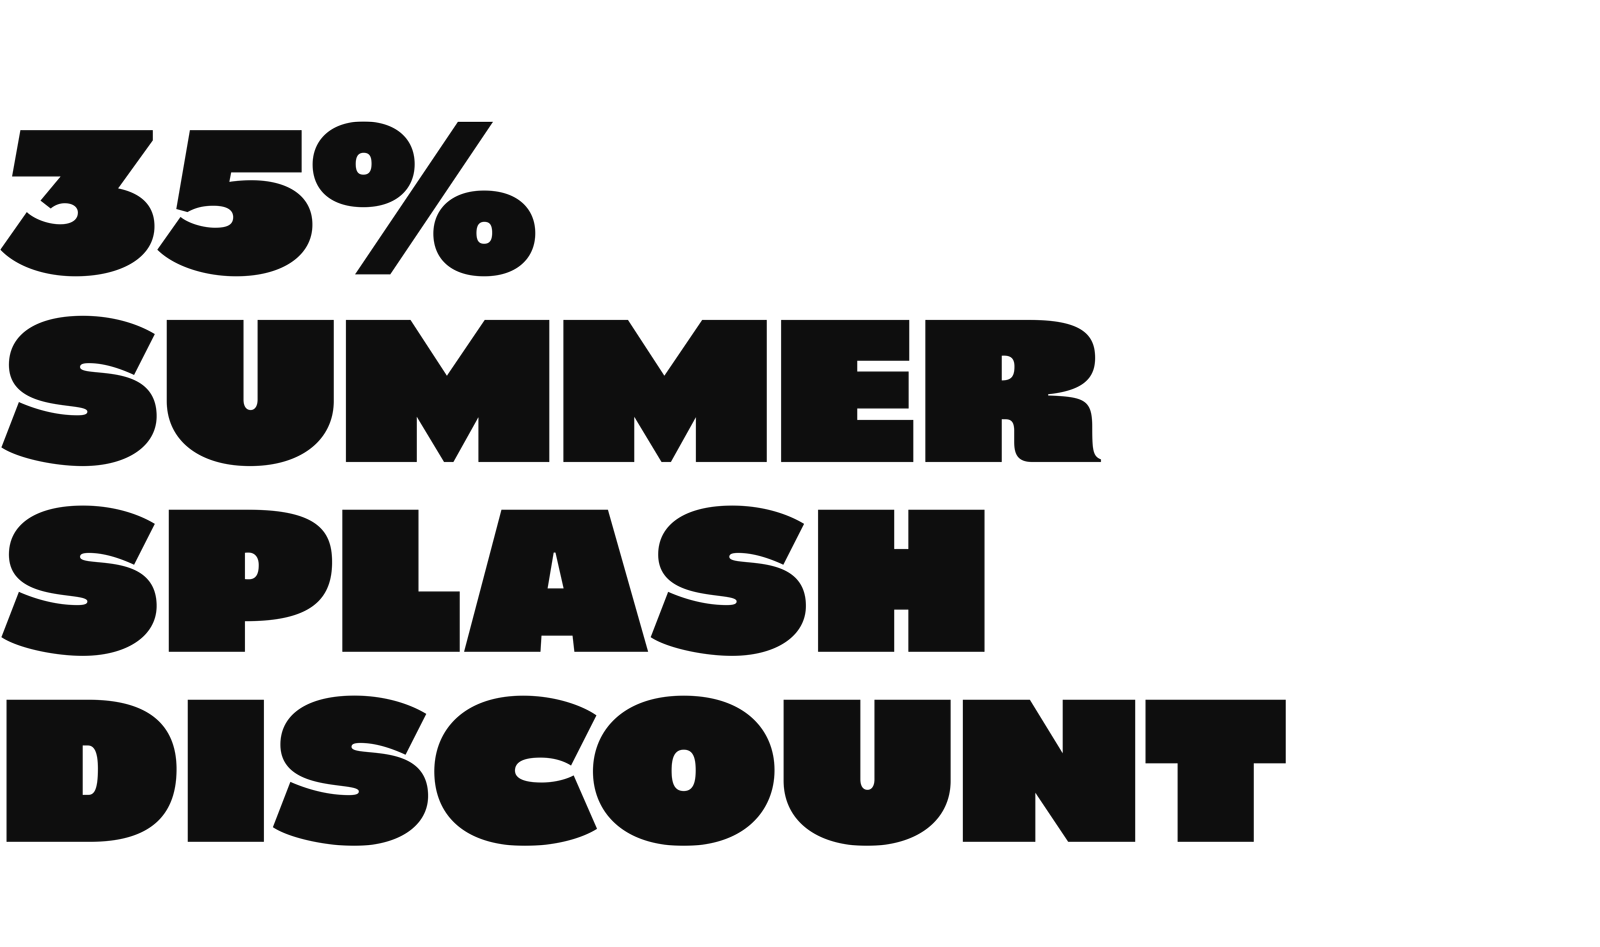 35% summer splash discount in all typefaces